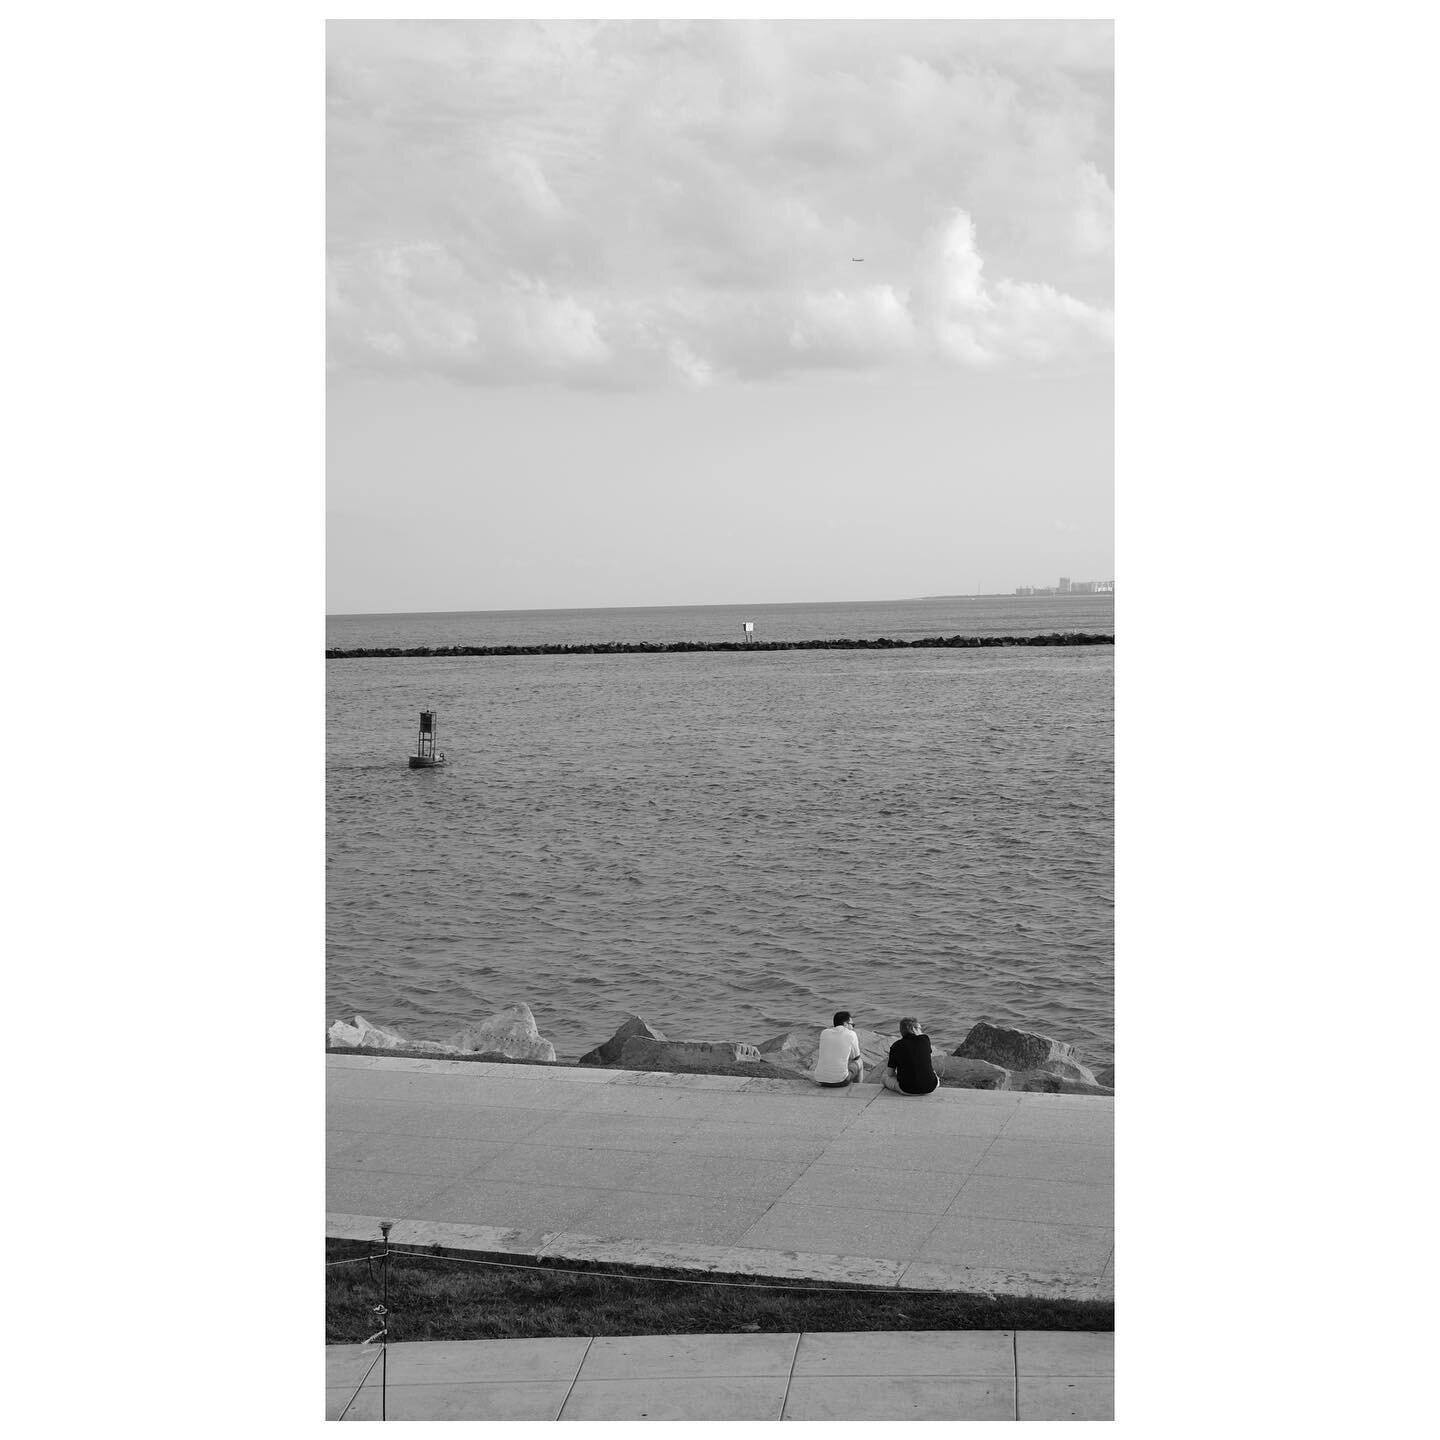 baywatch
.
.
.
. 

#blackandwhite #blackandwhitephotography #Fuji #FujiX100v #x100v #photography #dailychallenge #digitalphotography #affinityphoto #fujilove #myfujilove #streetphotography #miami #southpointe #southpointepark #water #ocean #fineart #